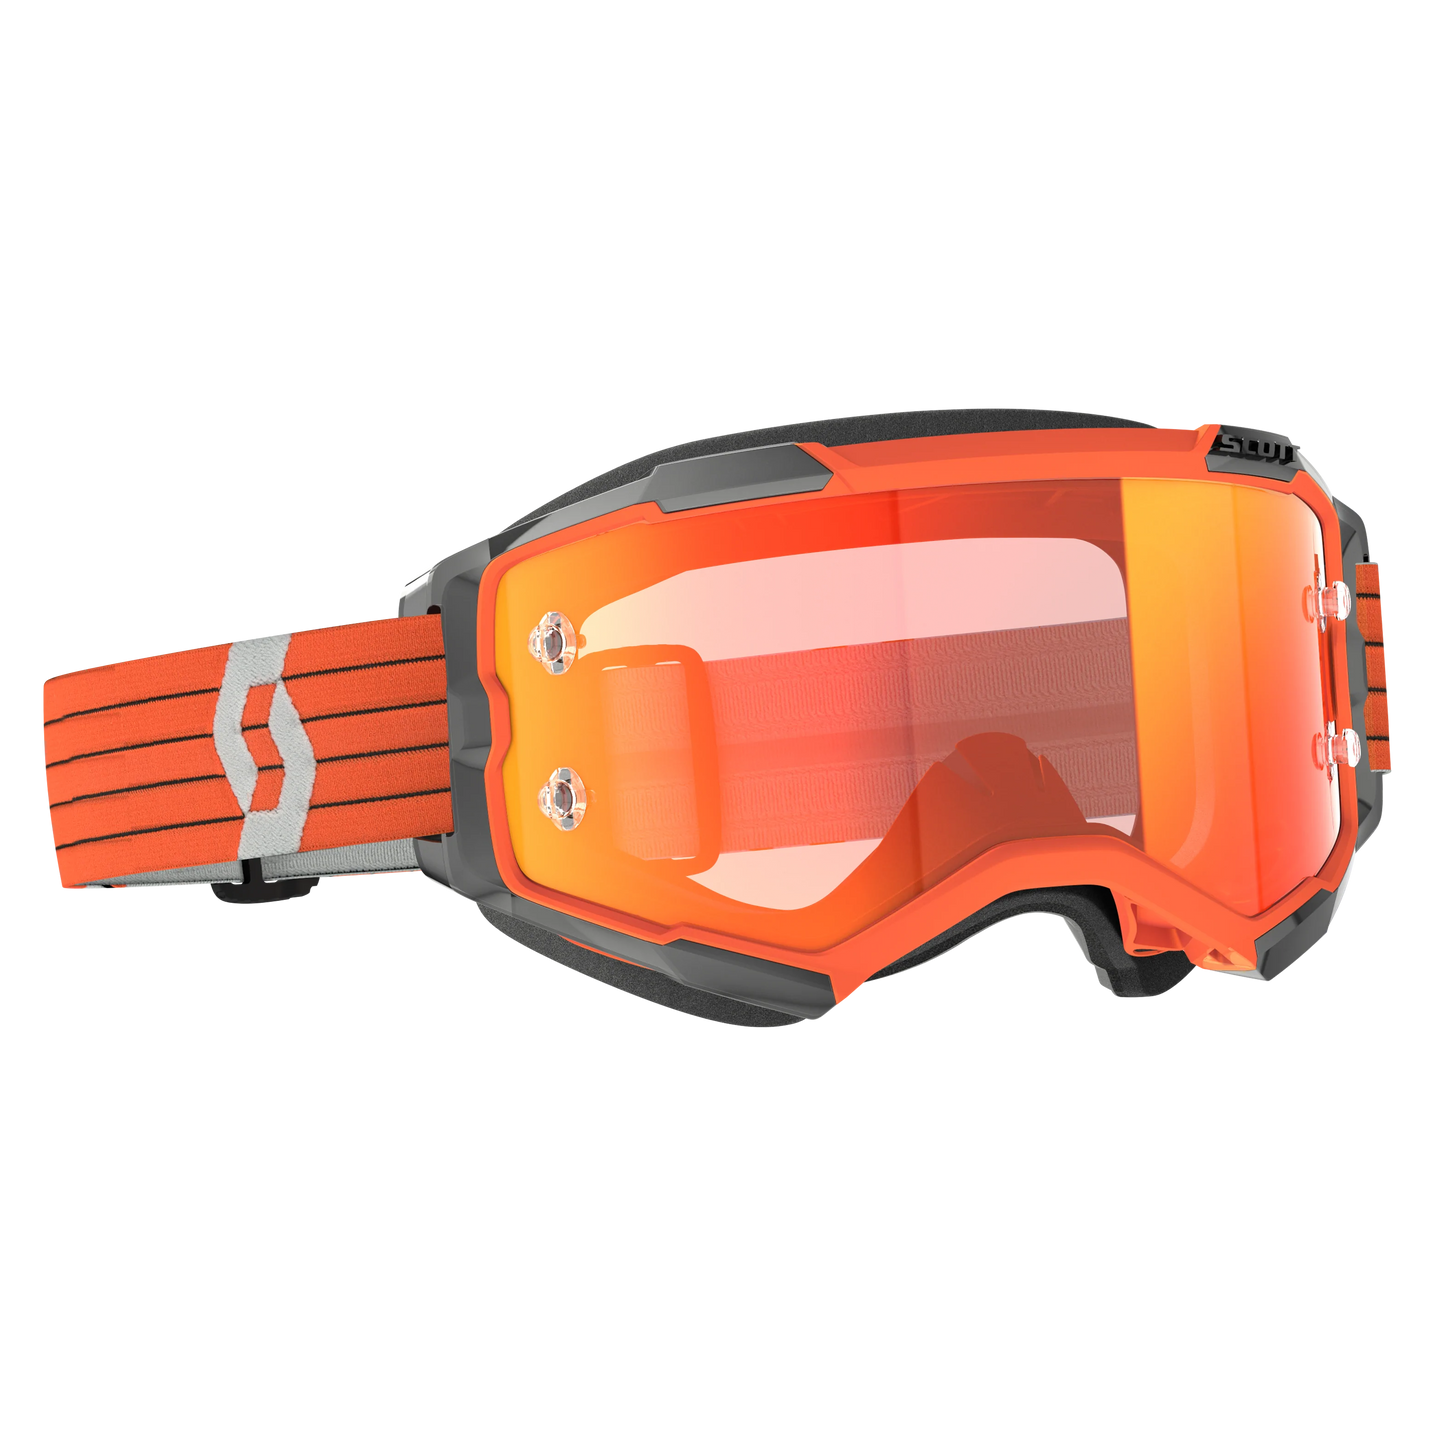 Scott Fury Goggles, Orange / Grey - Orange Chrome Works Lens